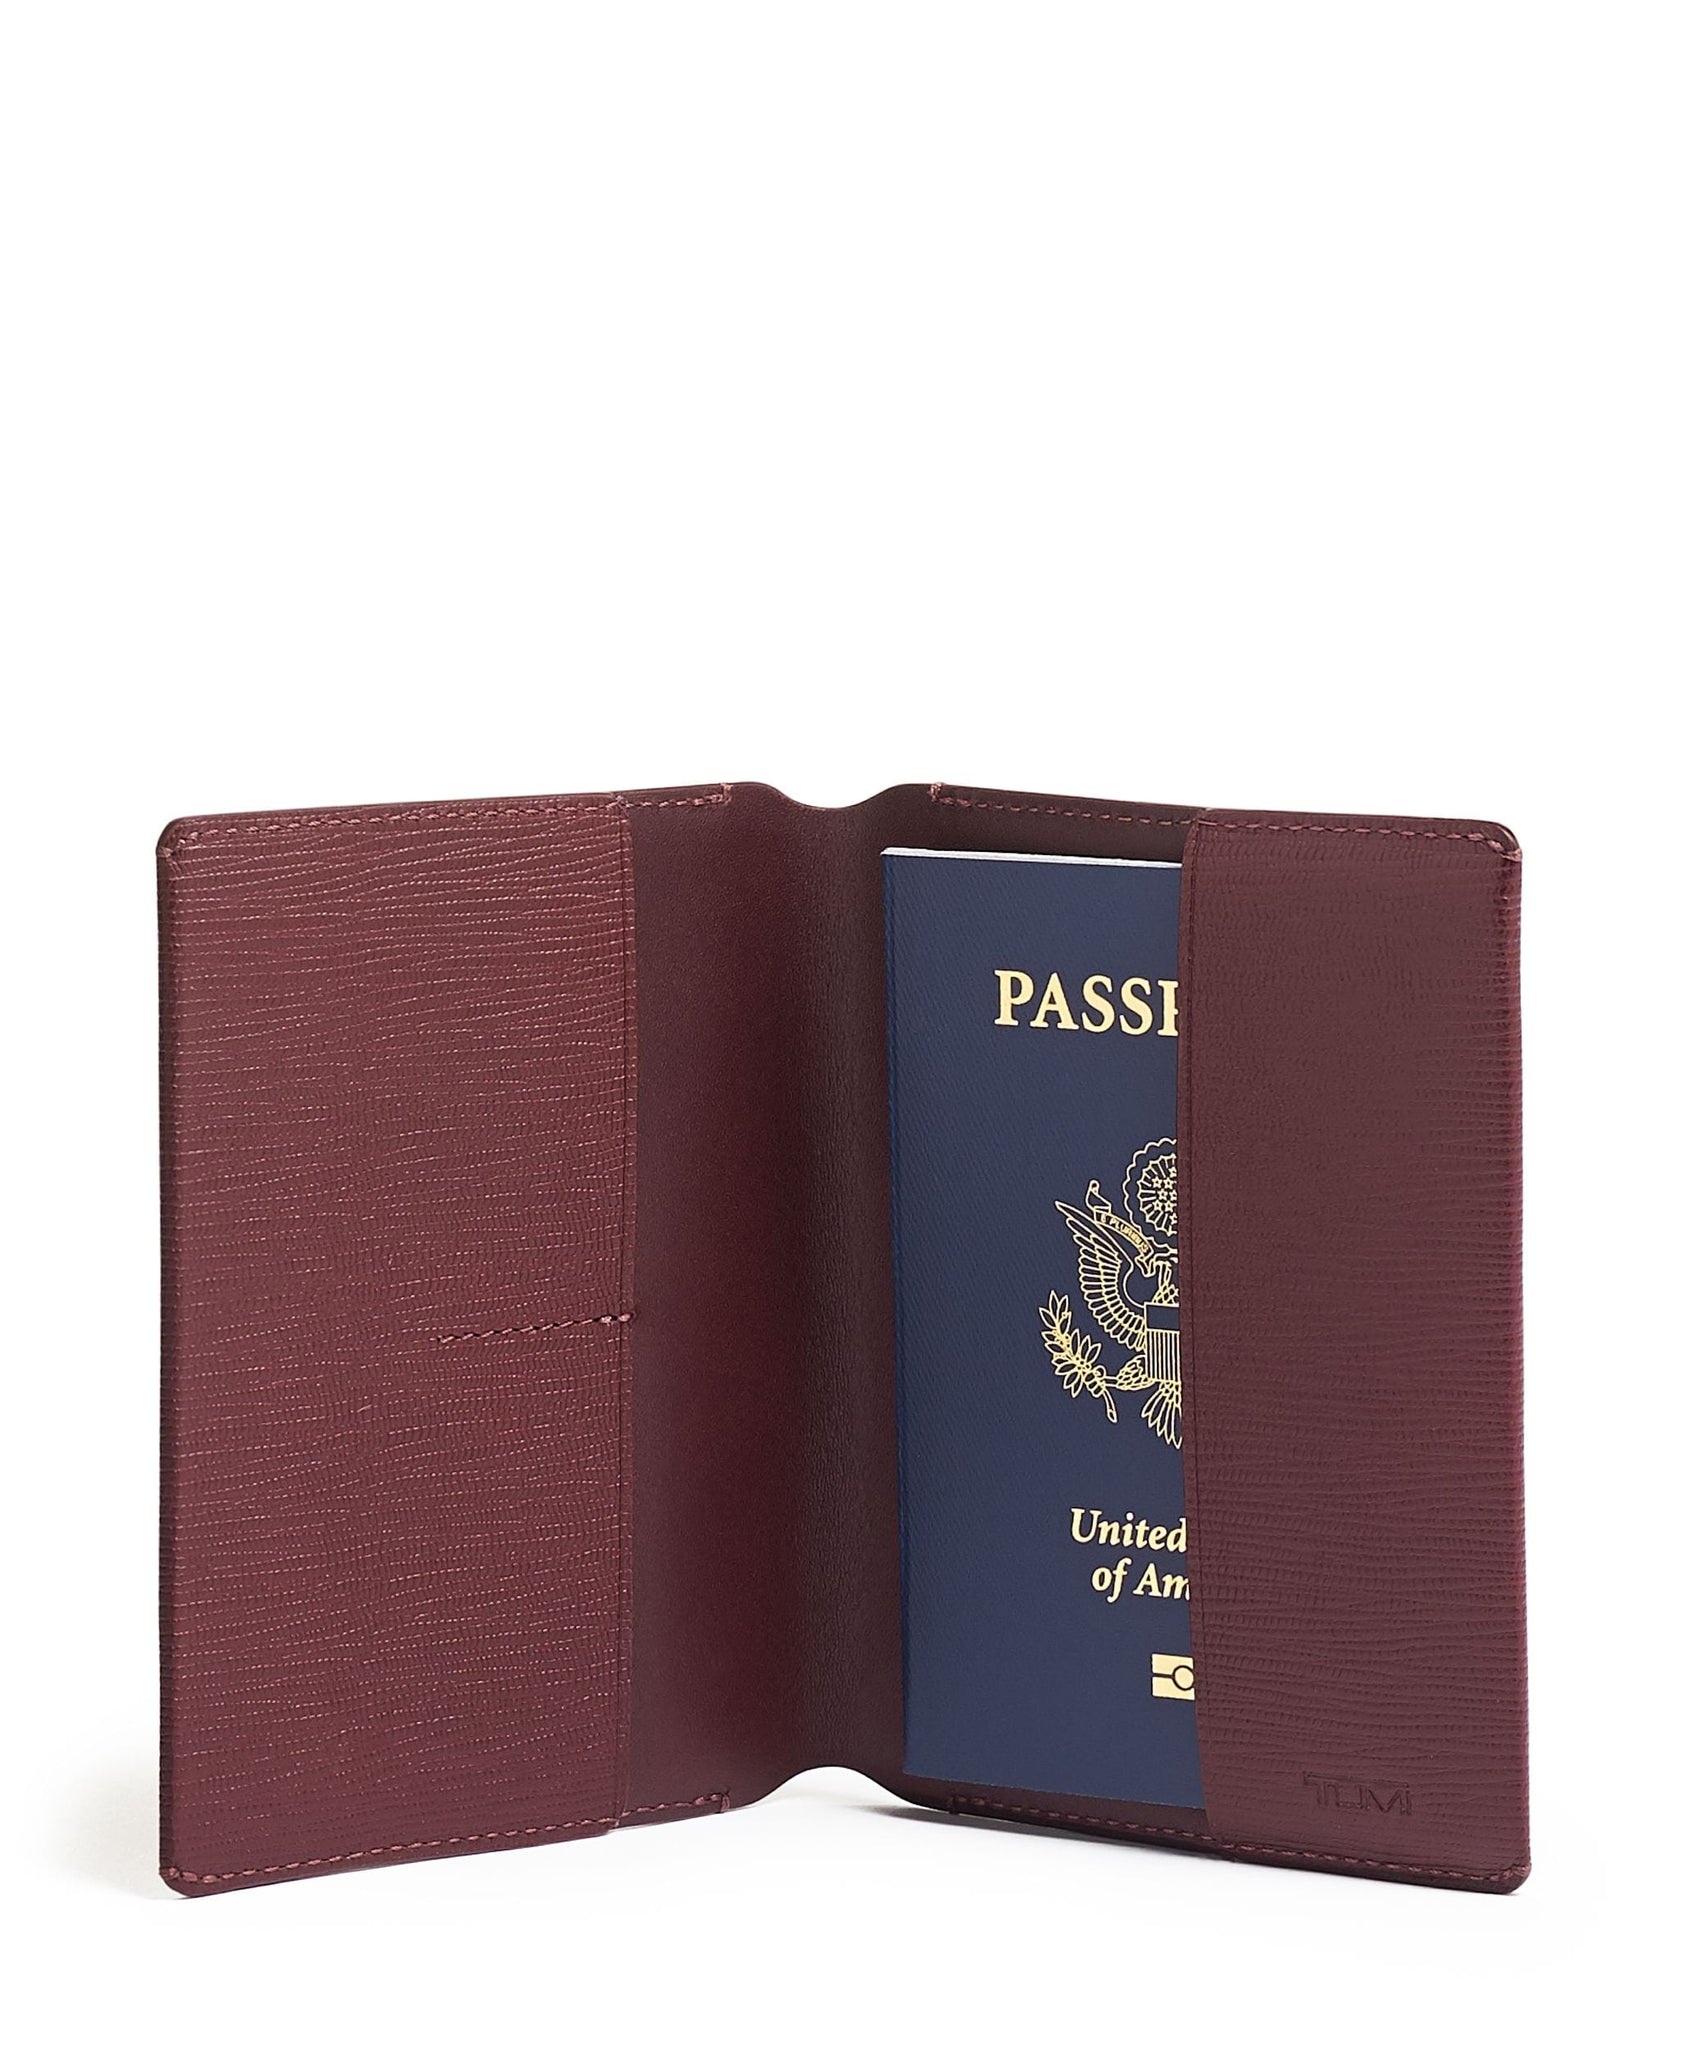 passport cover